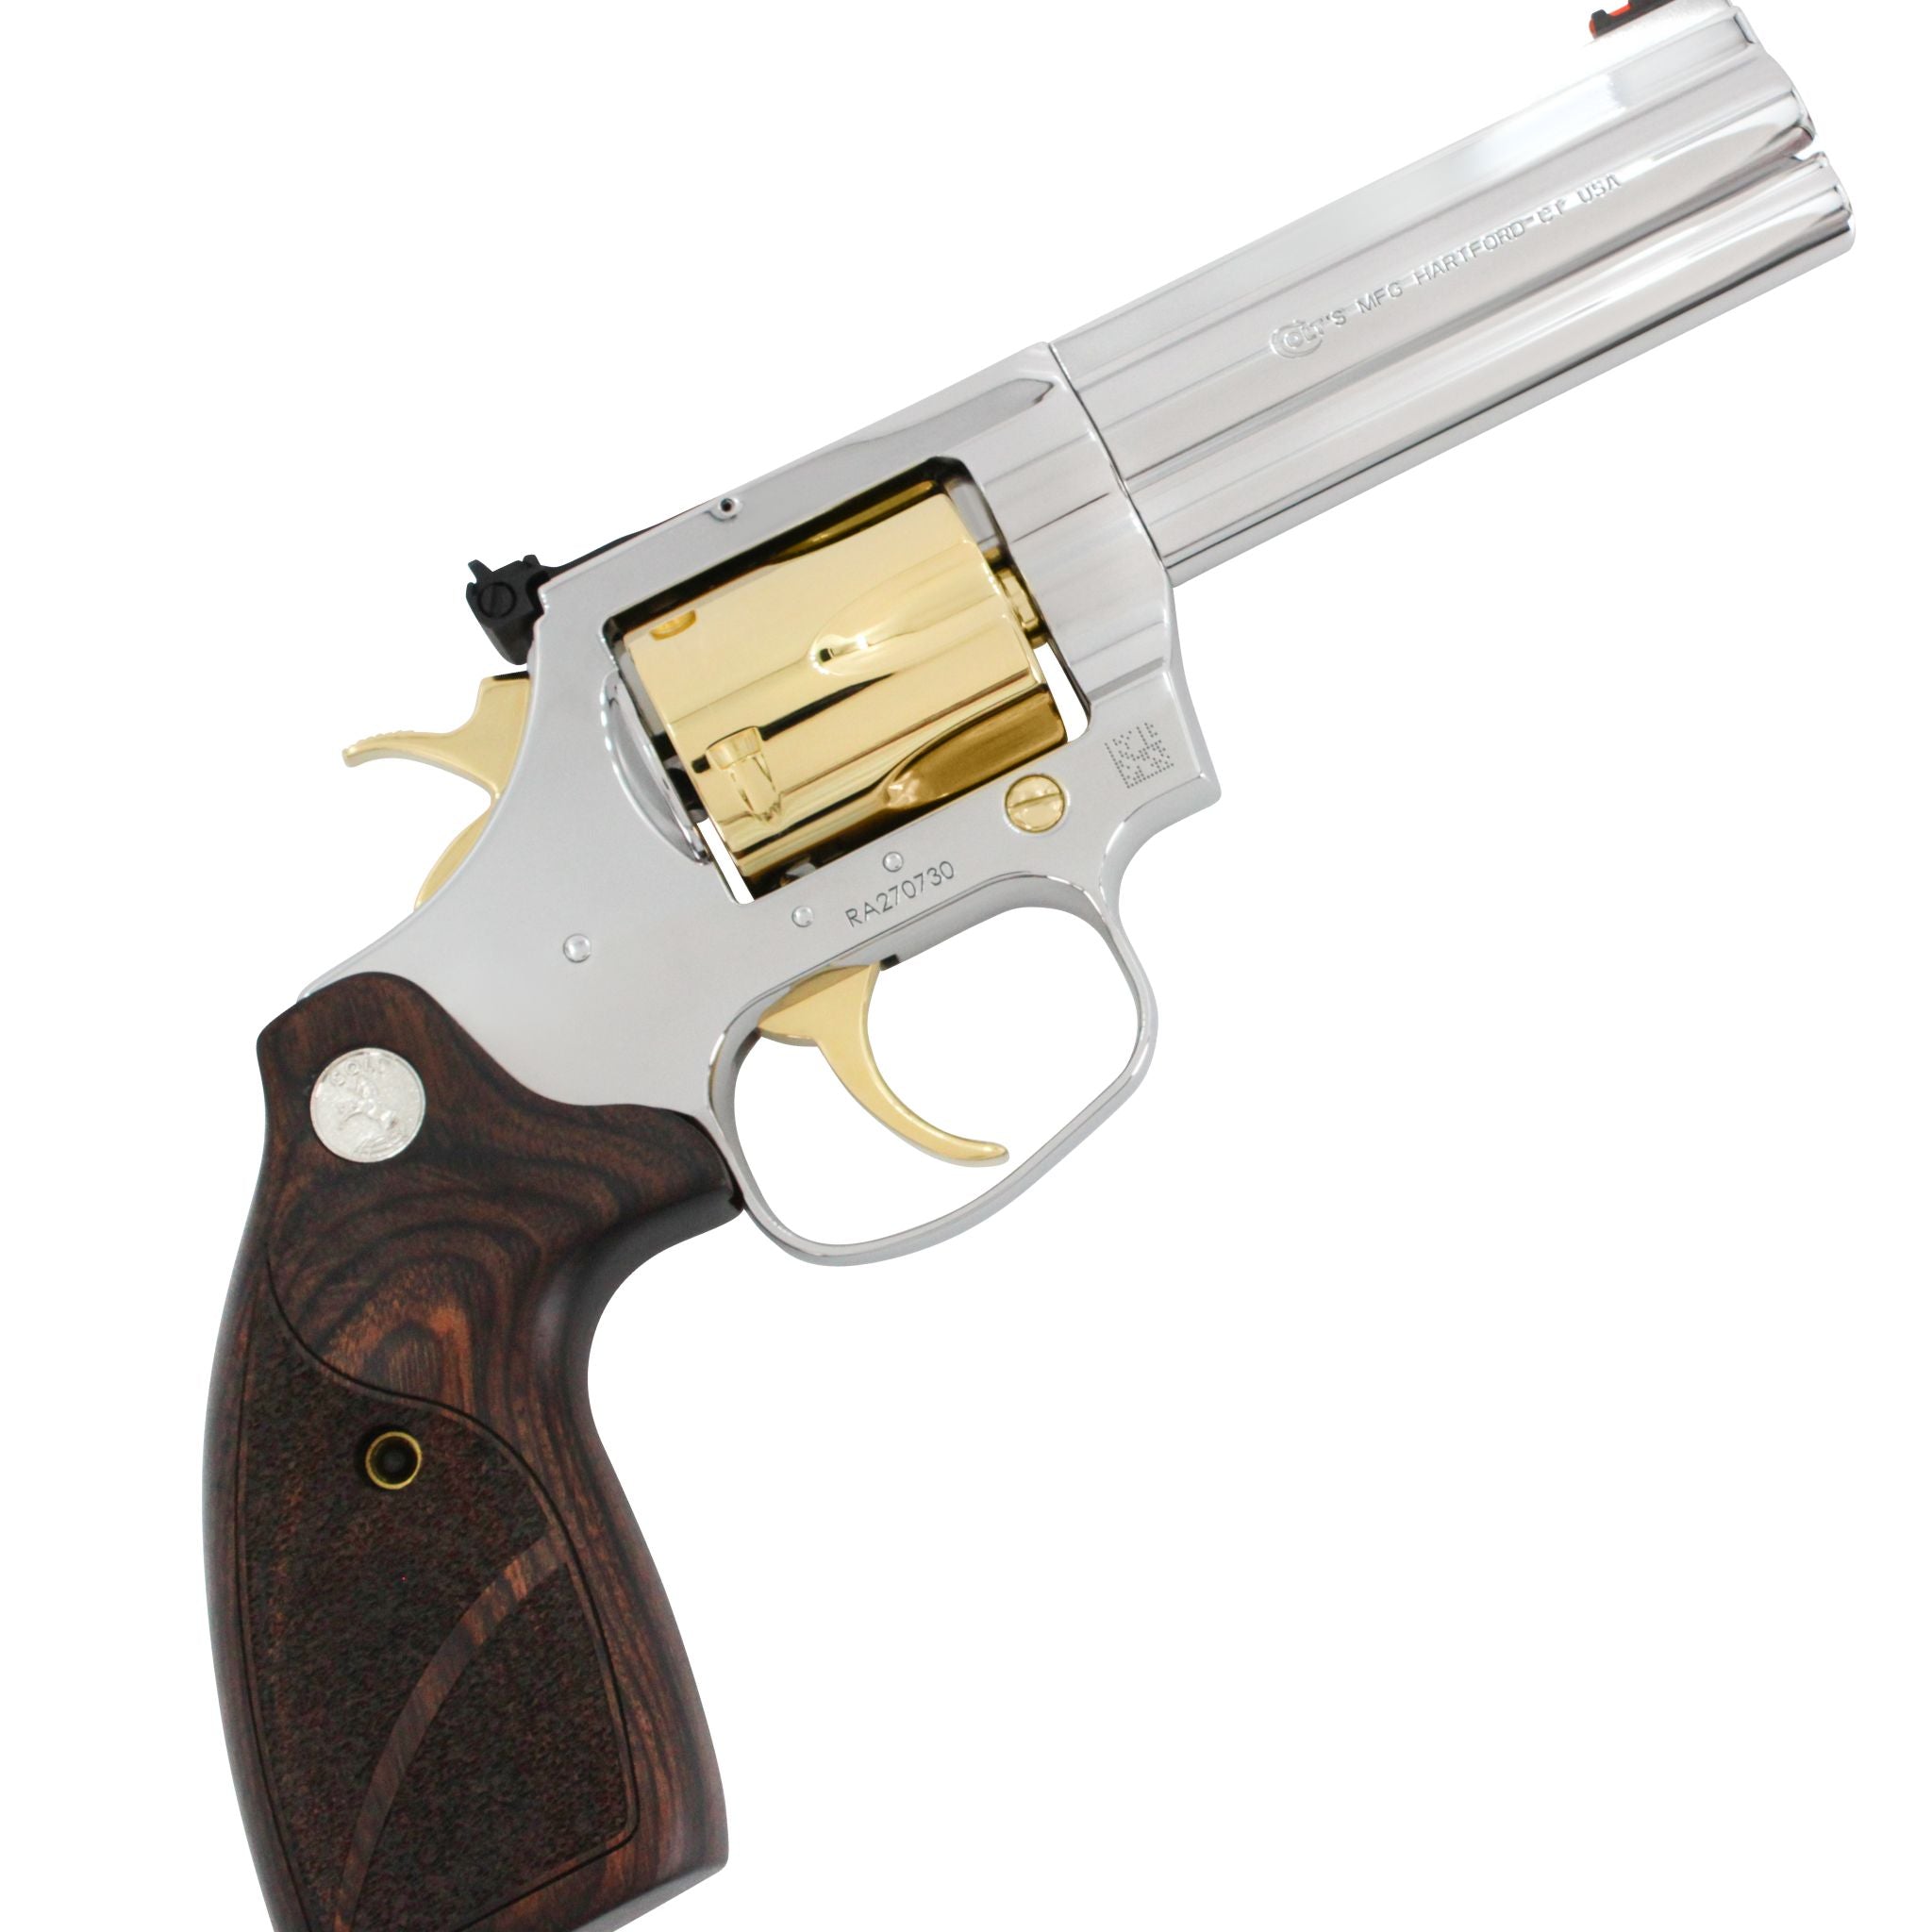 Colt King Cobra Target, 4", 357 Magnum High Polished Stainless Steel with 24 karat Gold Accents SKU: 4946750308454, Gold Gun, gold firearm